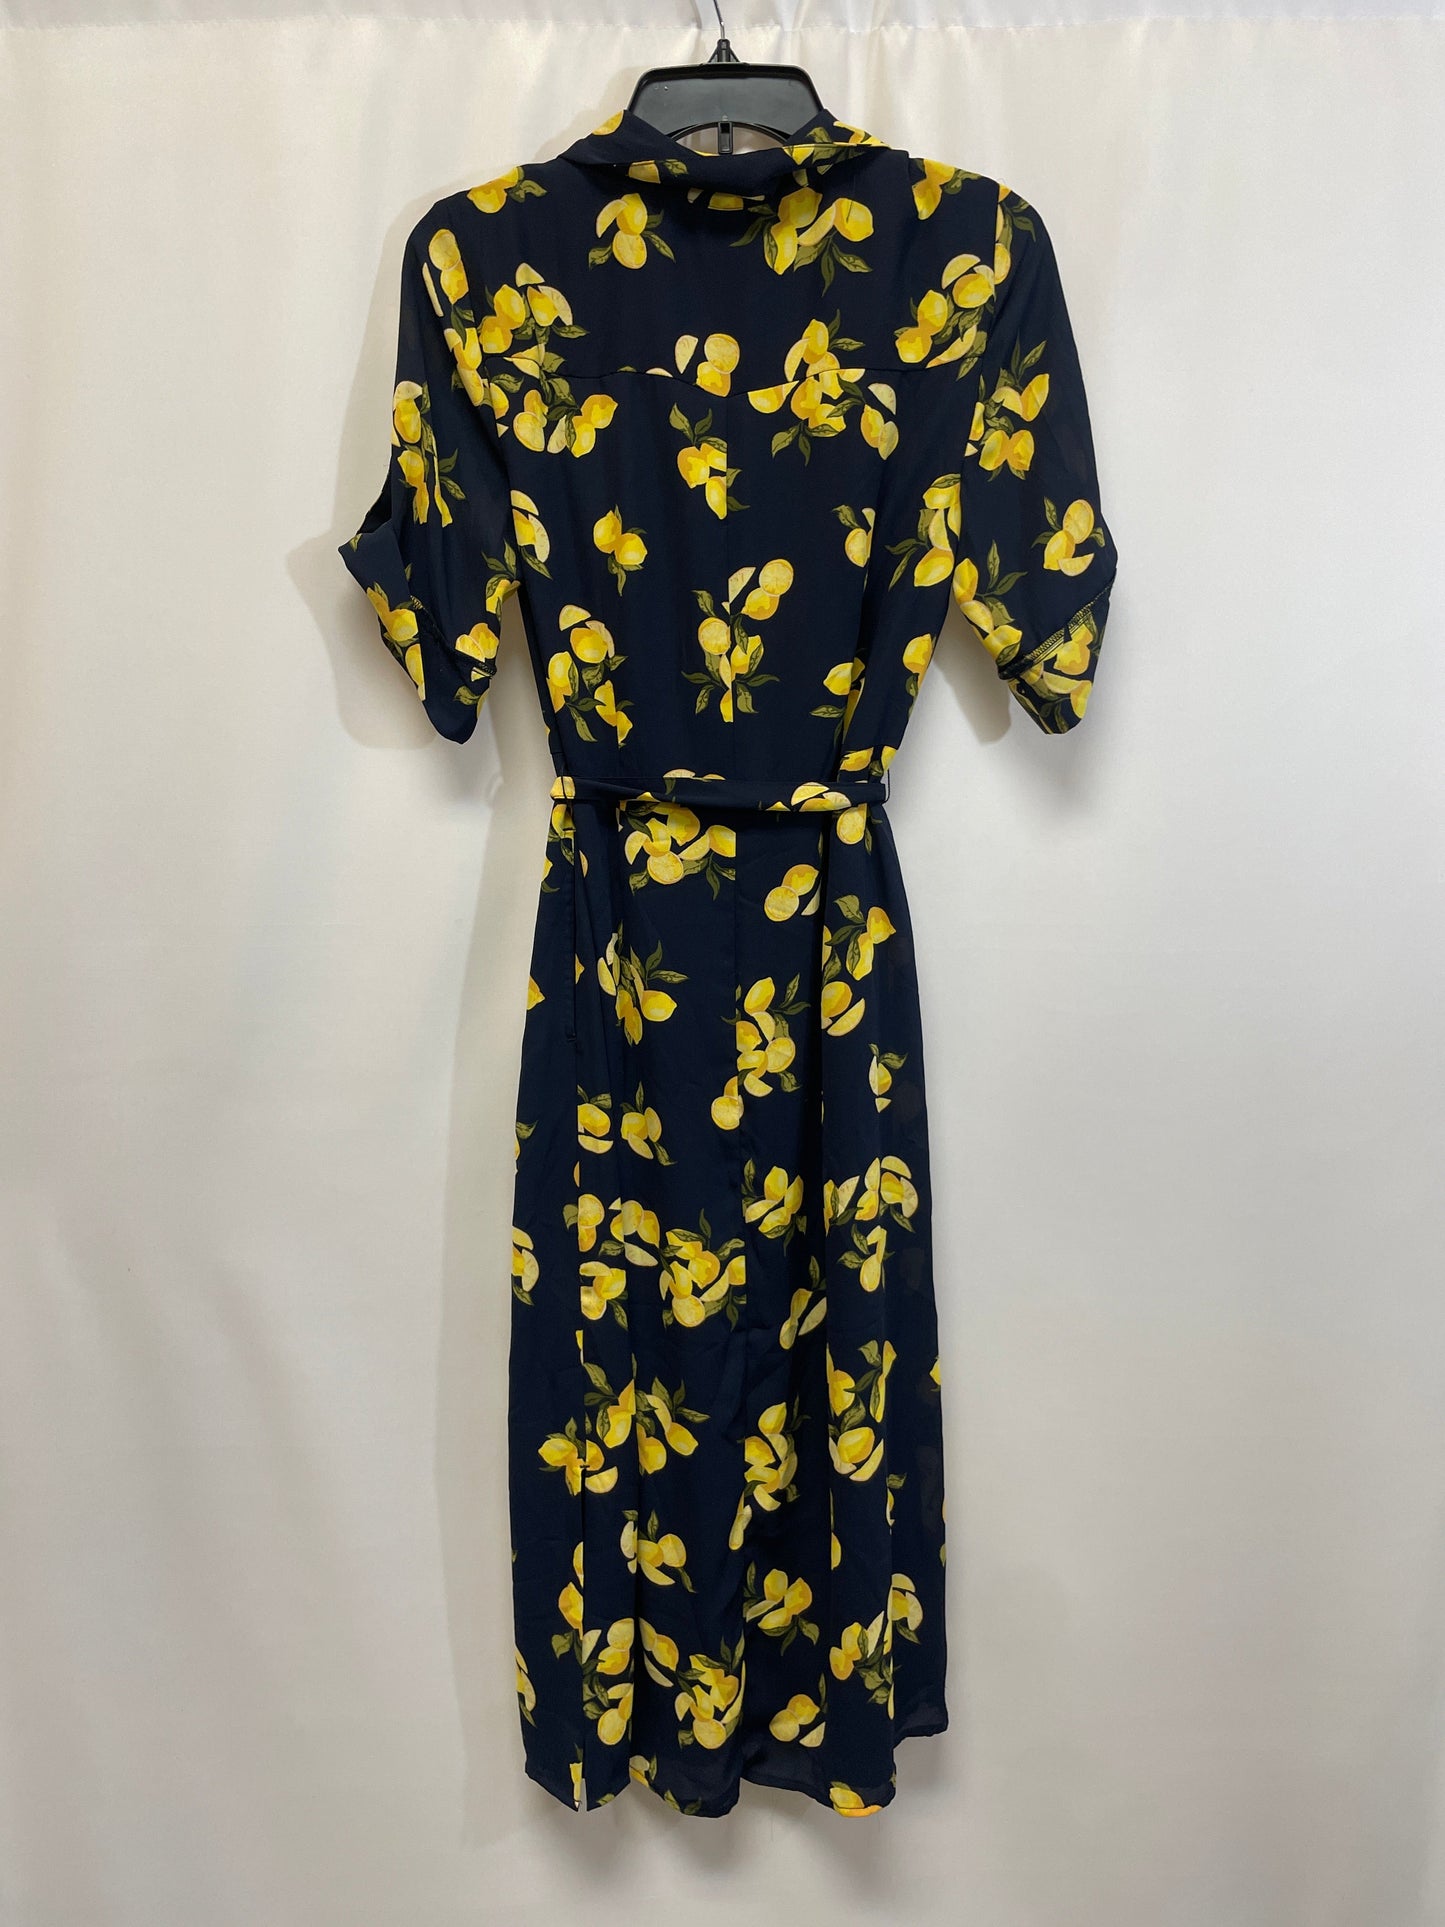 Blue & Yellow Dress Casual Midi Banana Republic, Size M